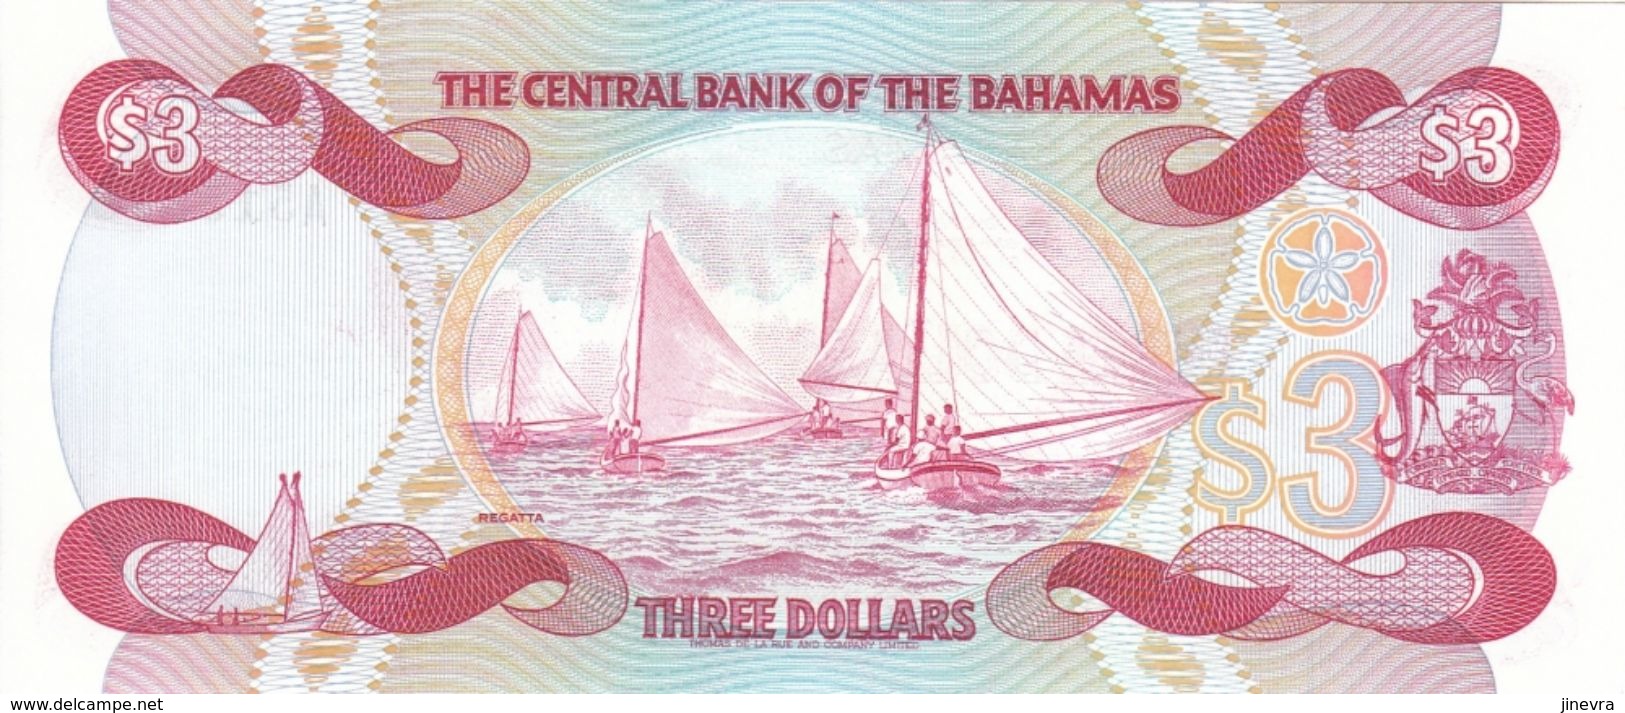 BAHAMAS 3 DOLLARS 1984 PICK 44 UNC - Bahamas